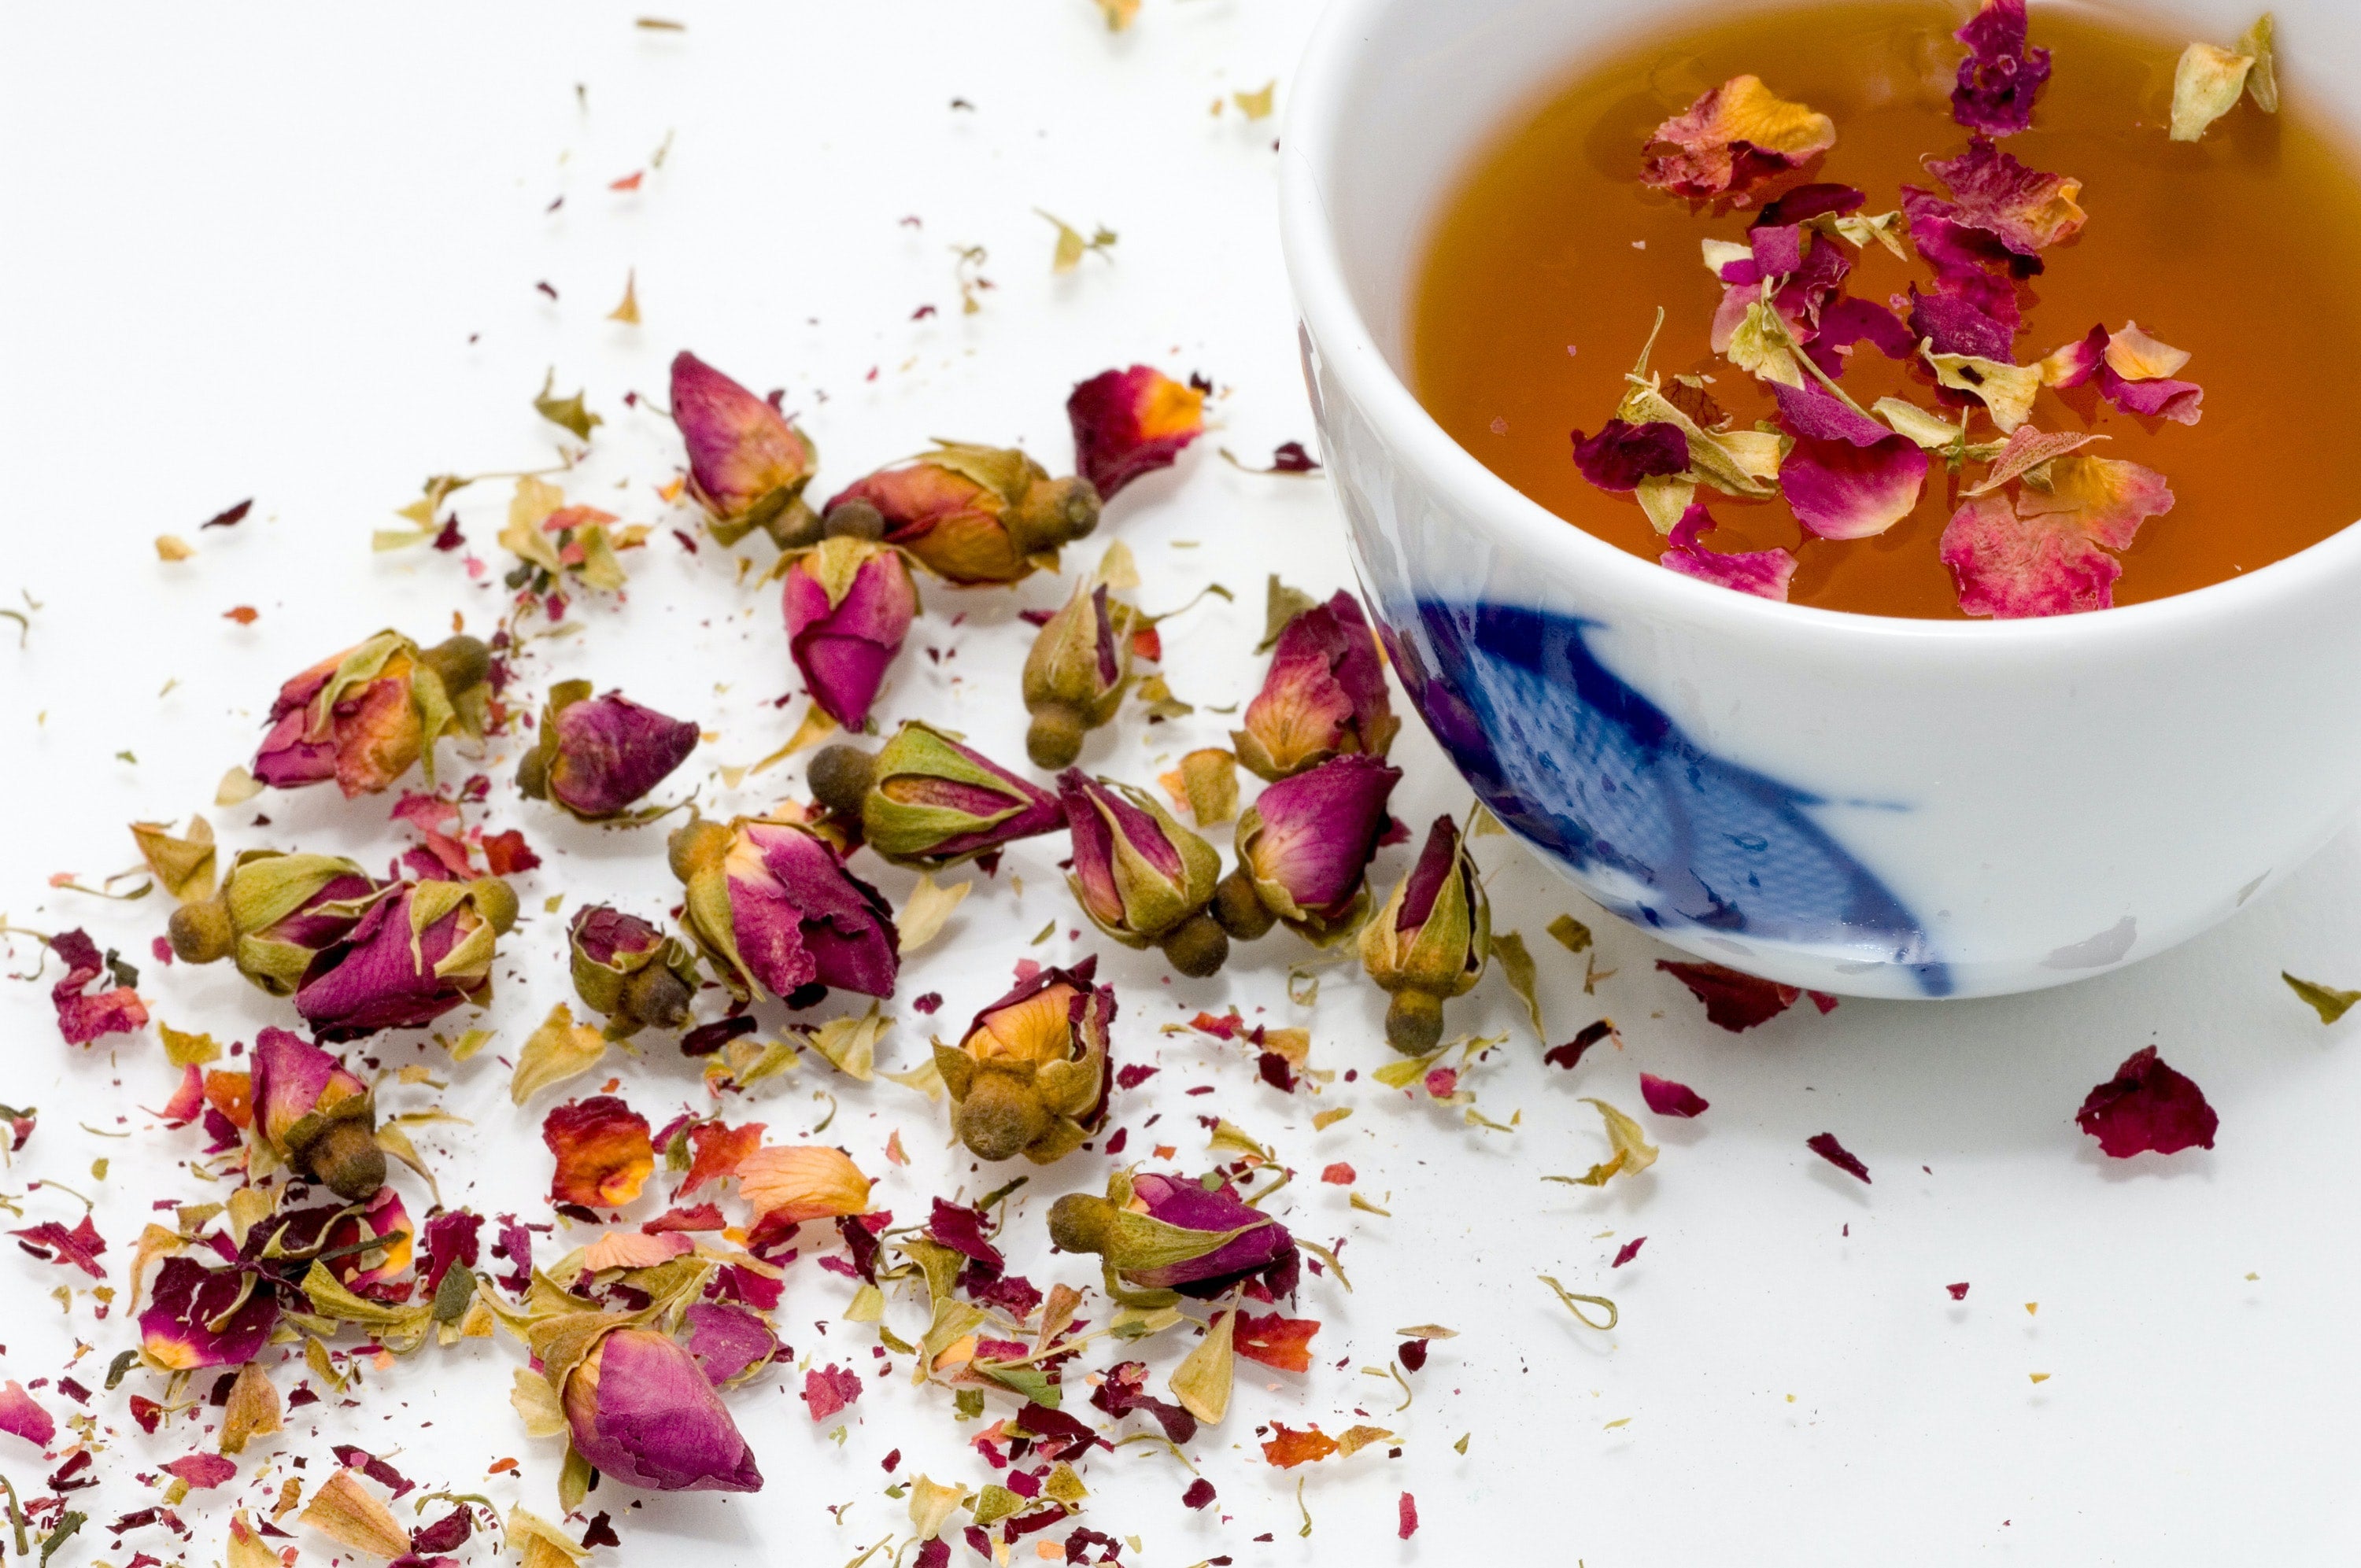 7 Beautiful Benefits of Rose Tea, “The King of Flowers” - Organic India